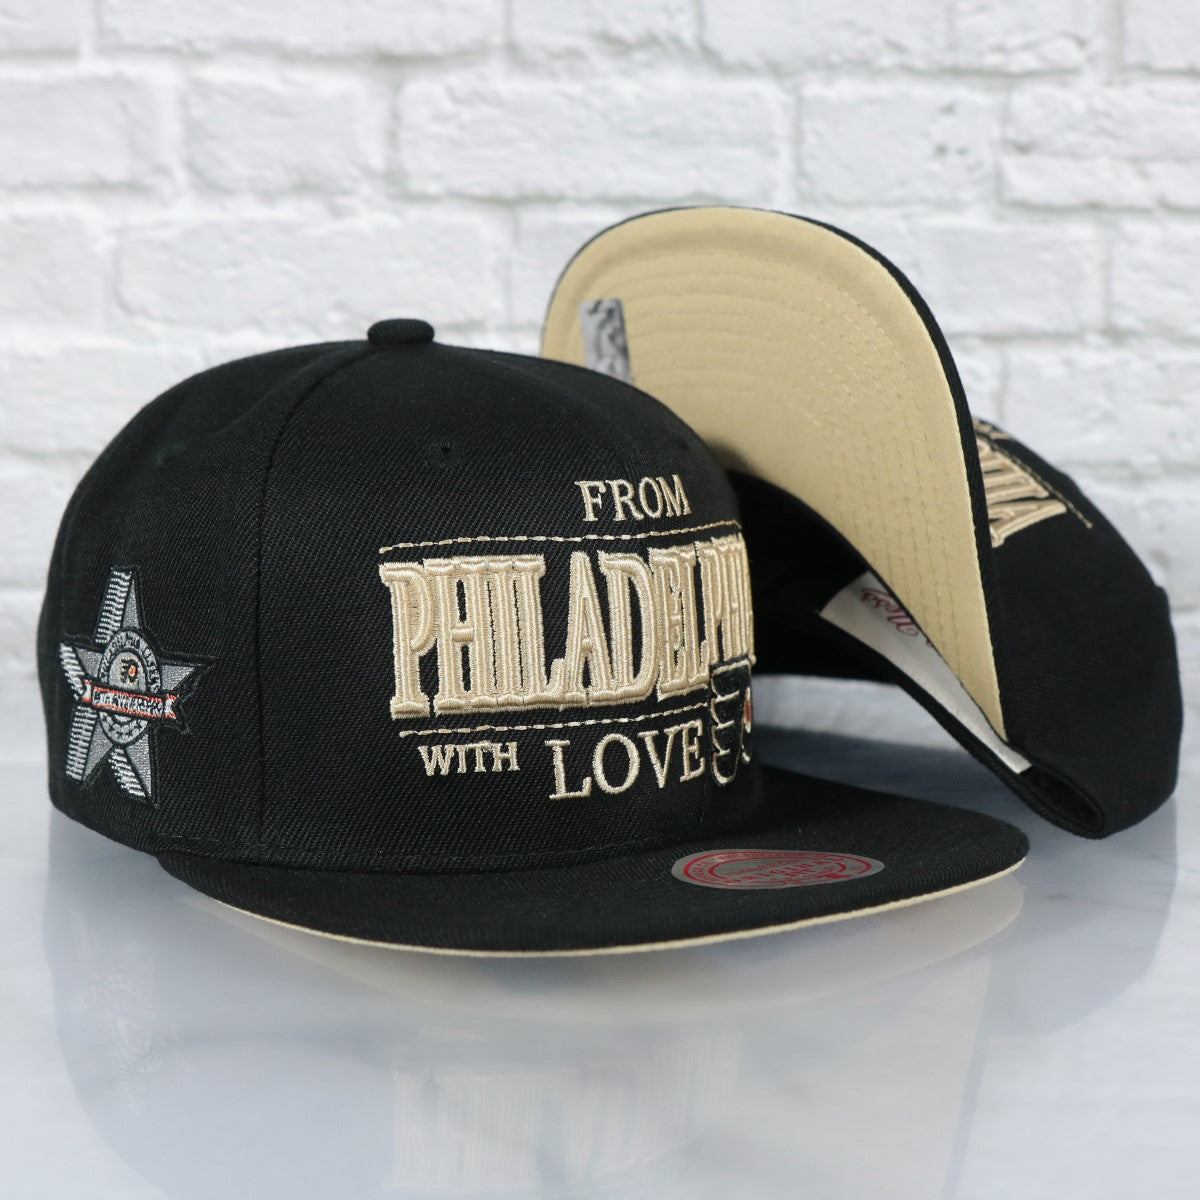 Philadelphia Flyers With Love 25th Anniversary Side Patch Cream Bottom | Black Snapback Hat